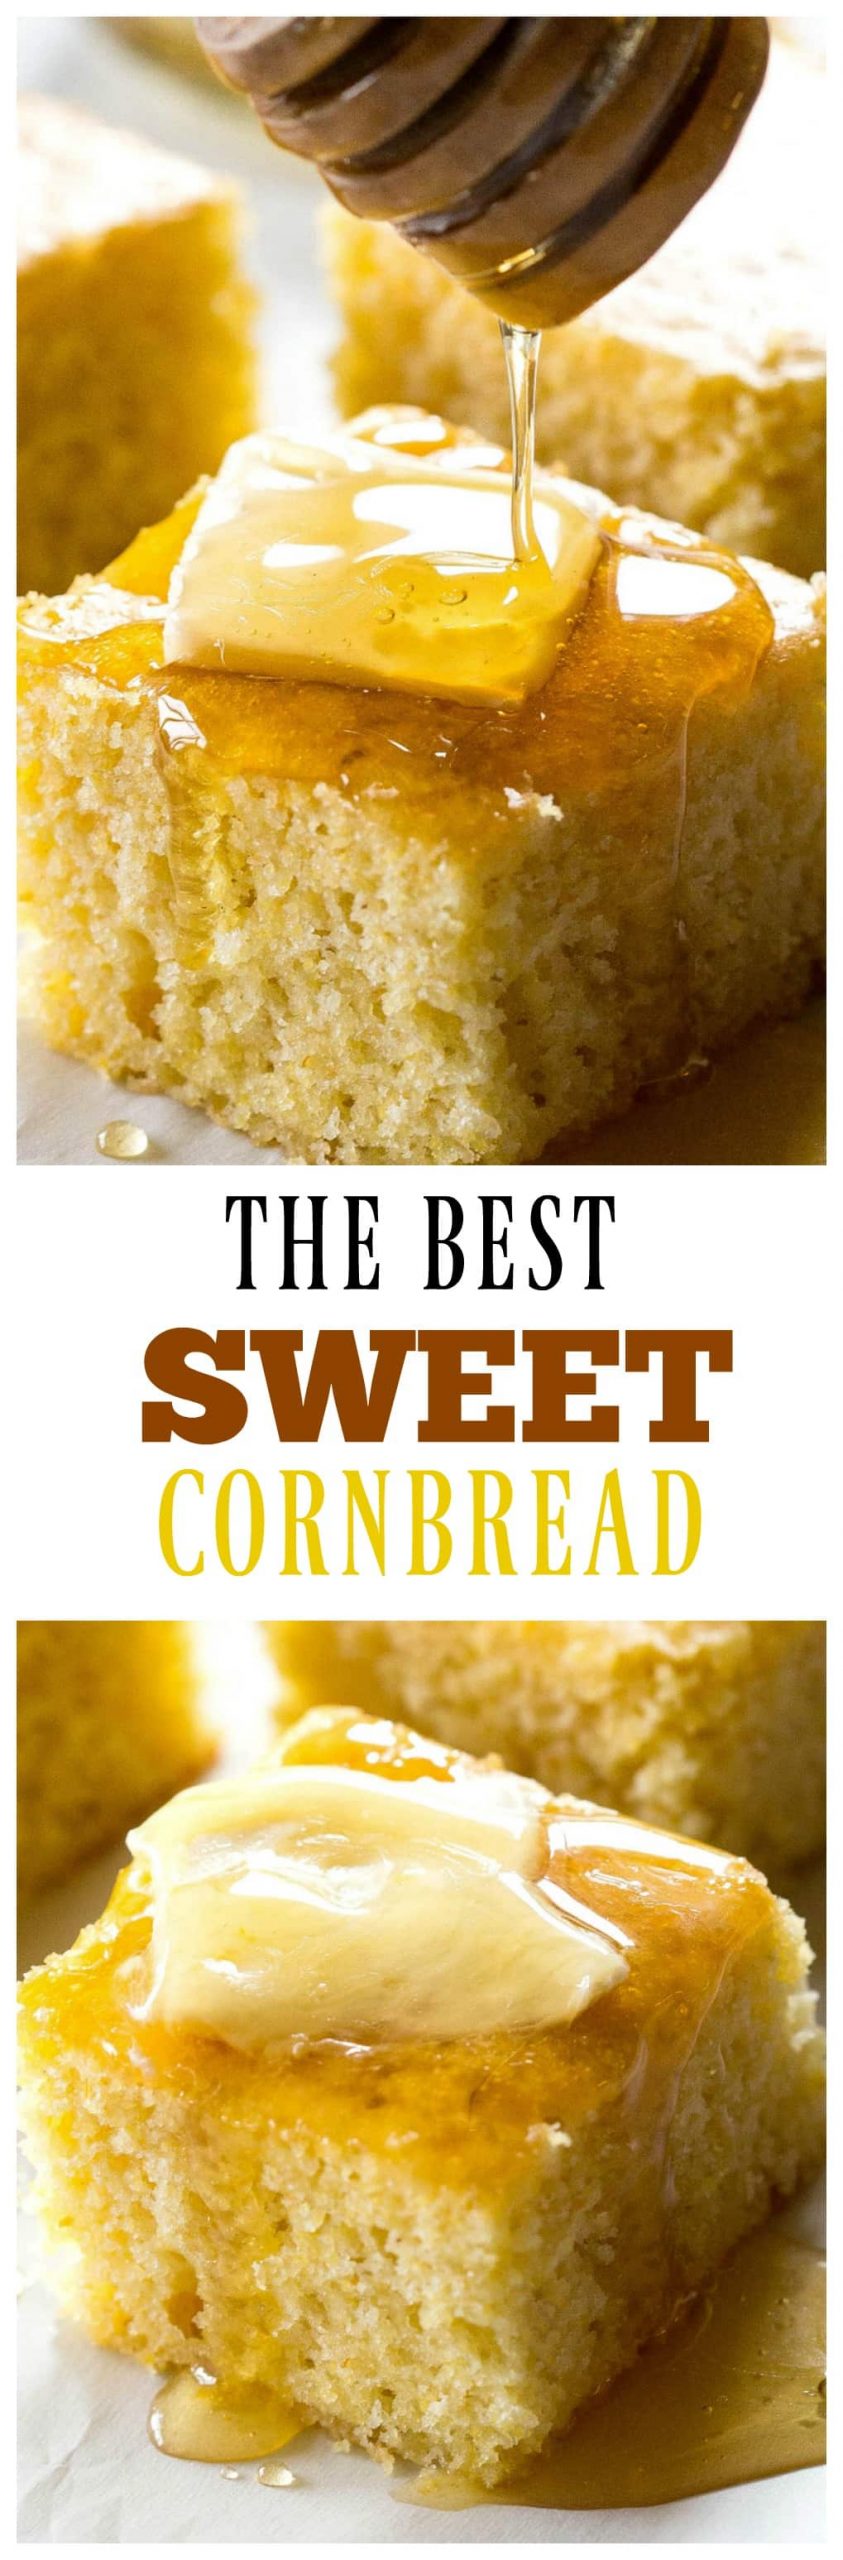 The Best Sweet Cornbread - soft, tender cornbread that's sweet just like I like it. #sweet #cornbread #recipe #easy #chili #side